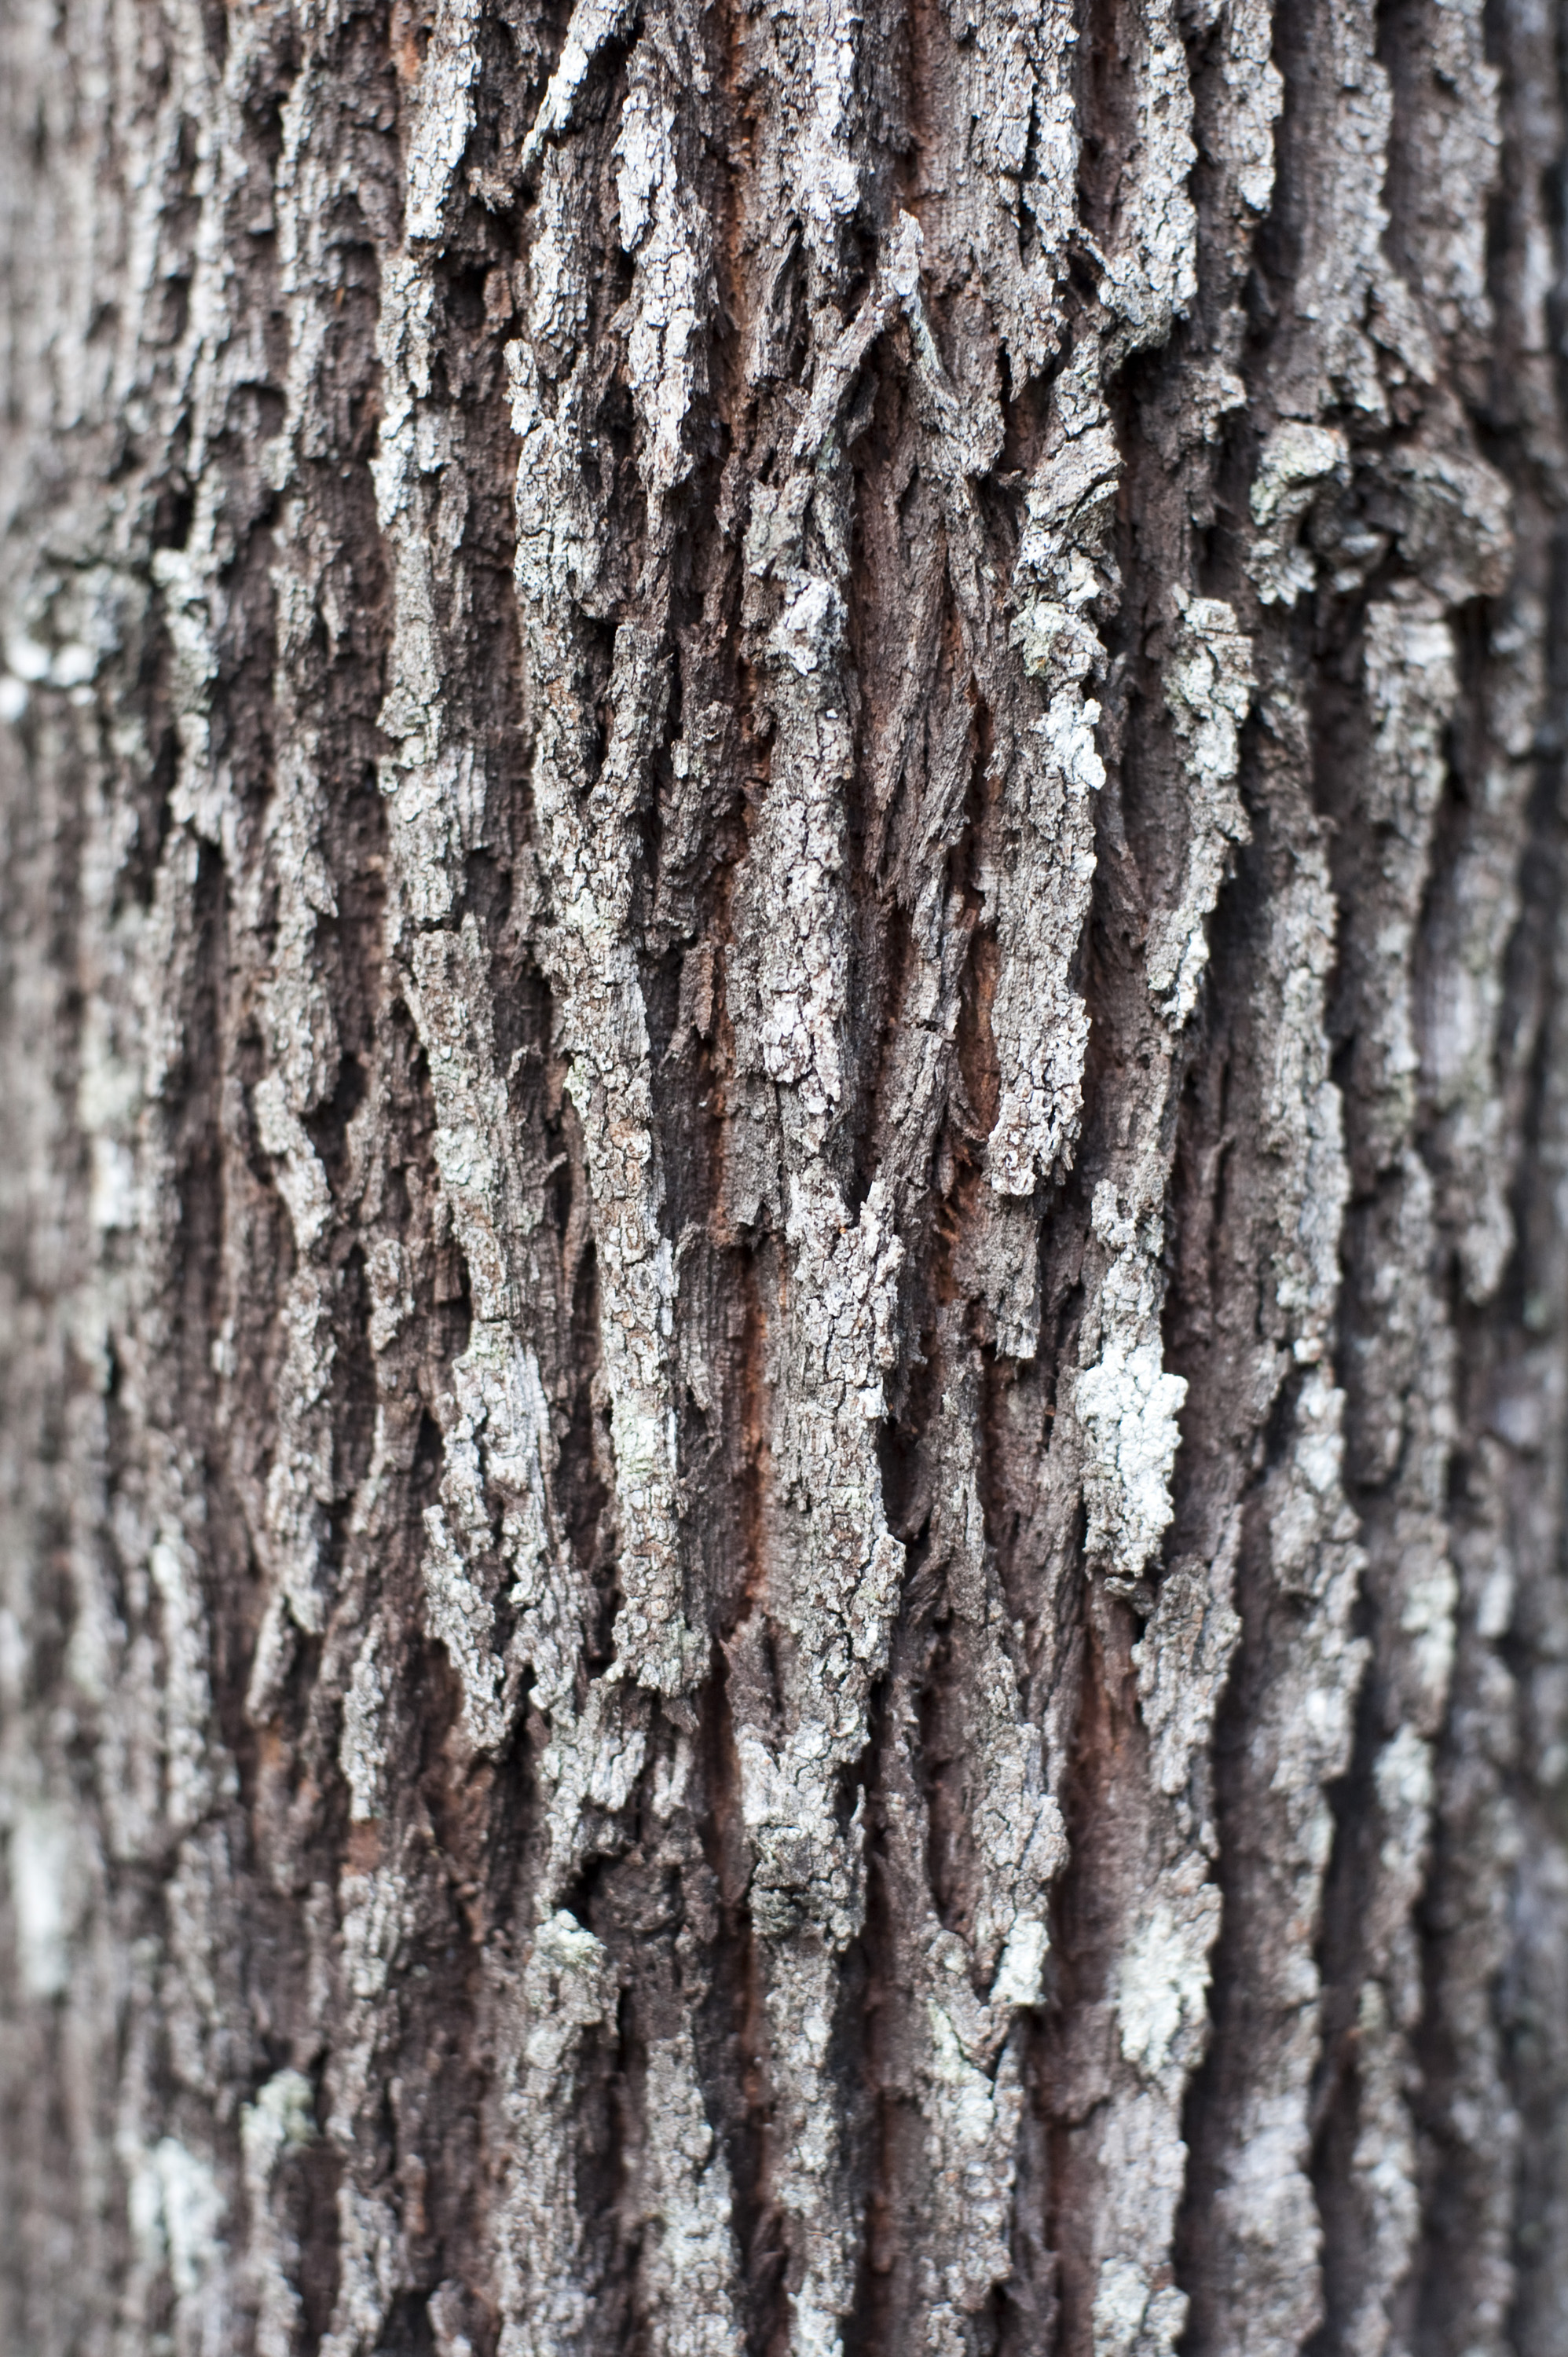 Free image of tree bark